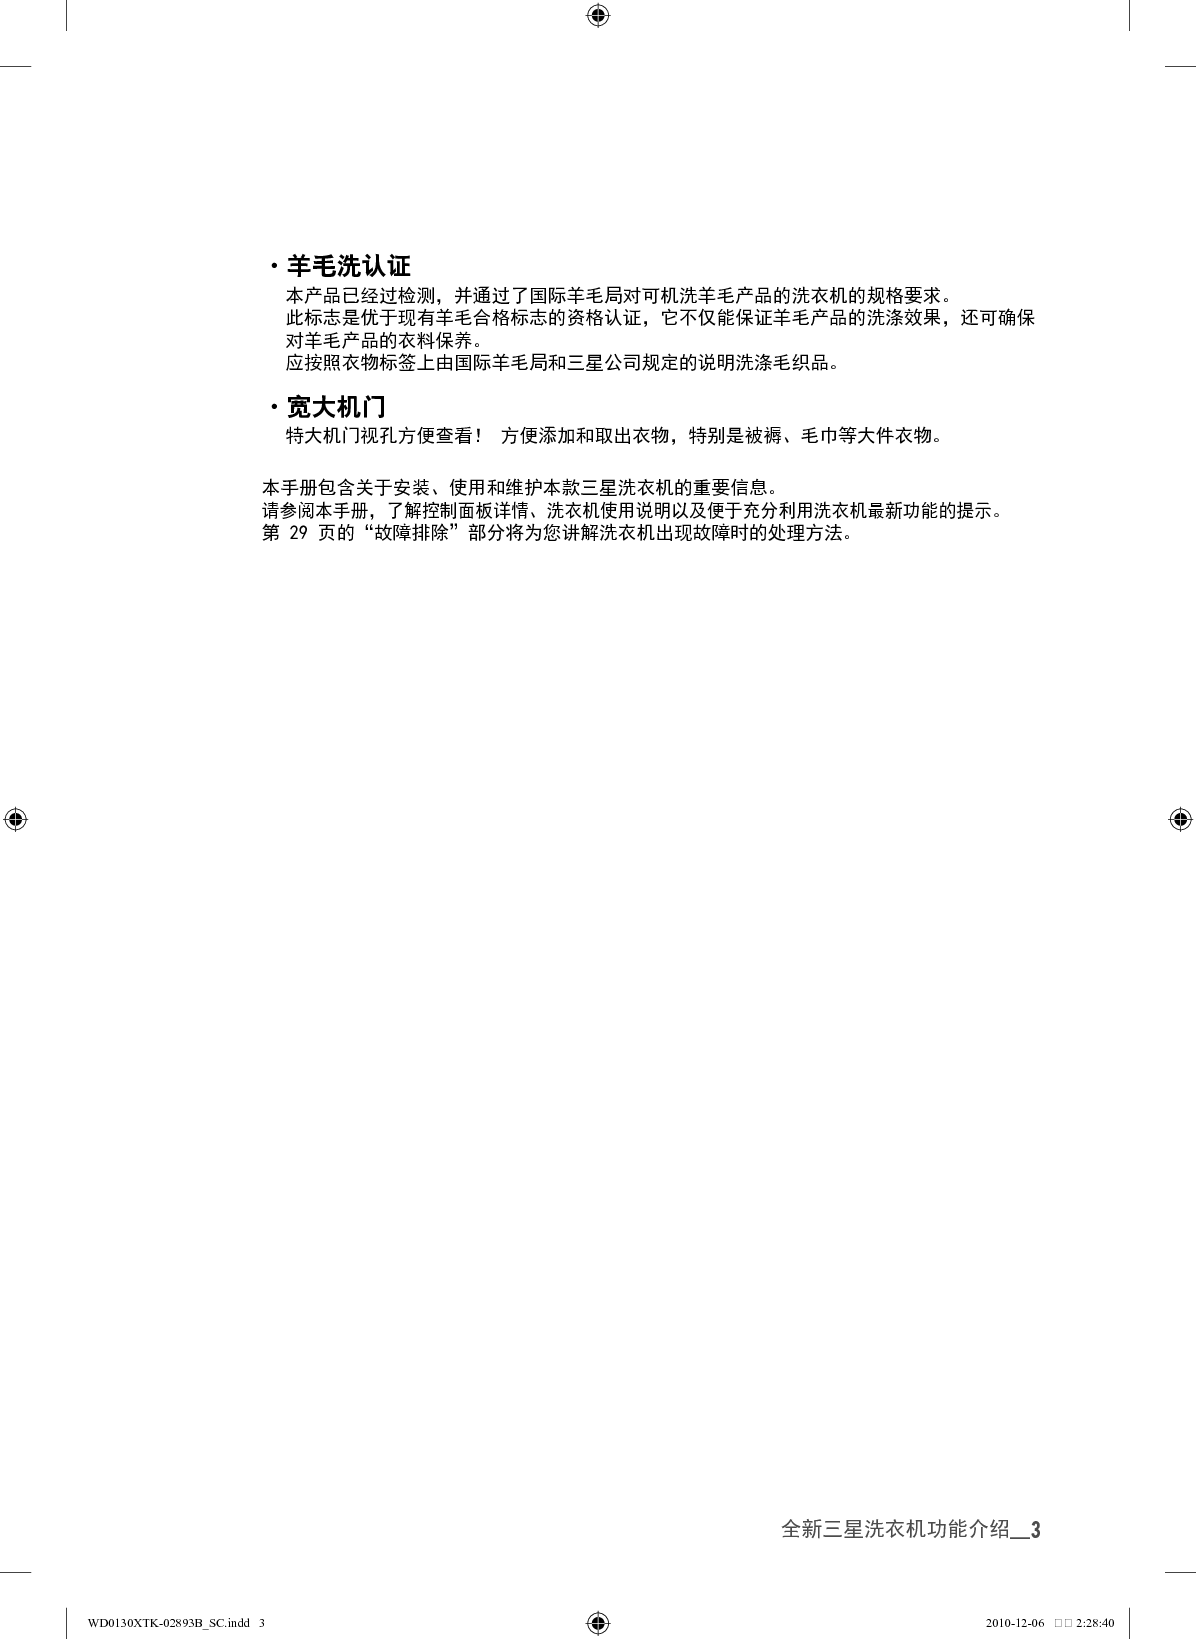 三星 Samsung WD0130XTK 使用说明书 第2页